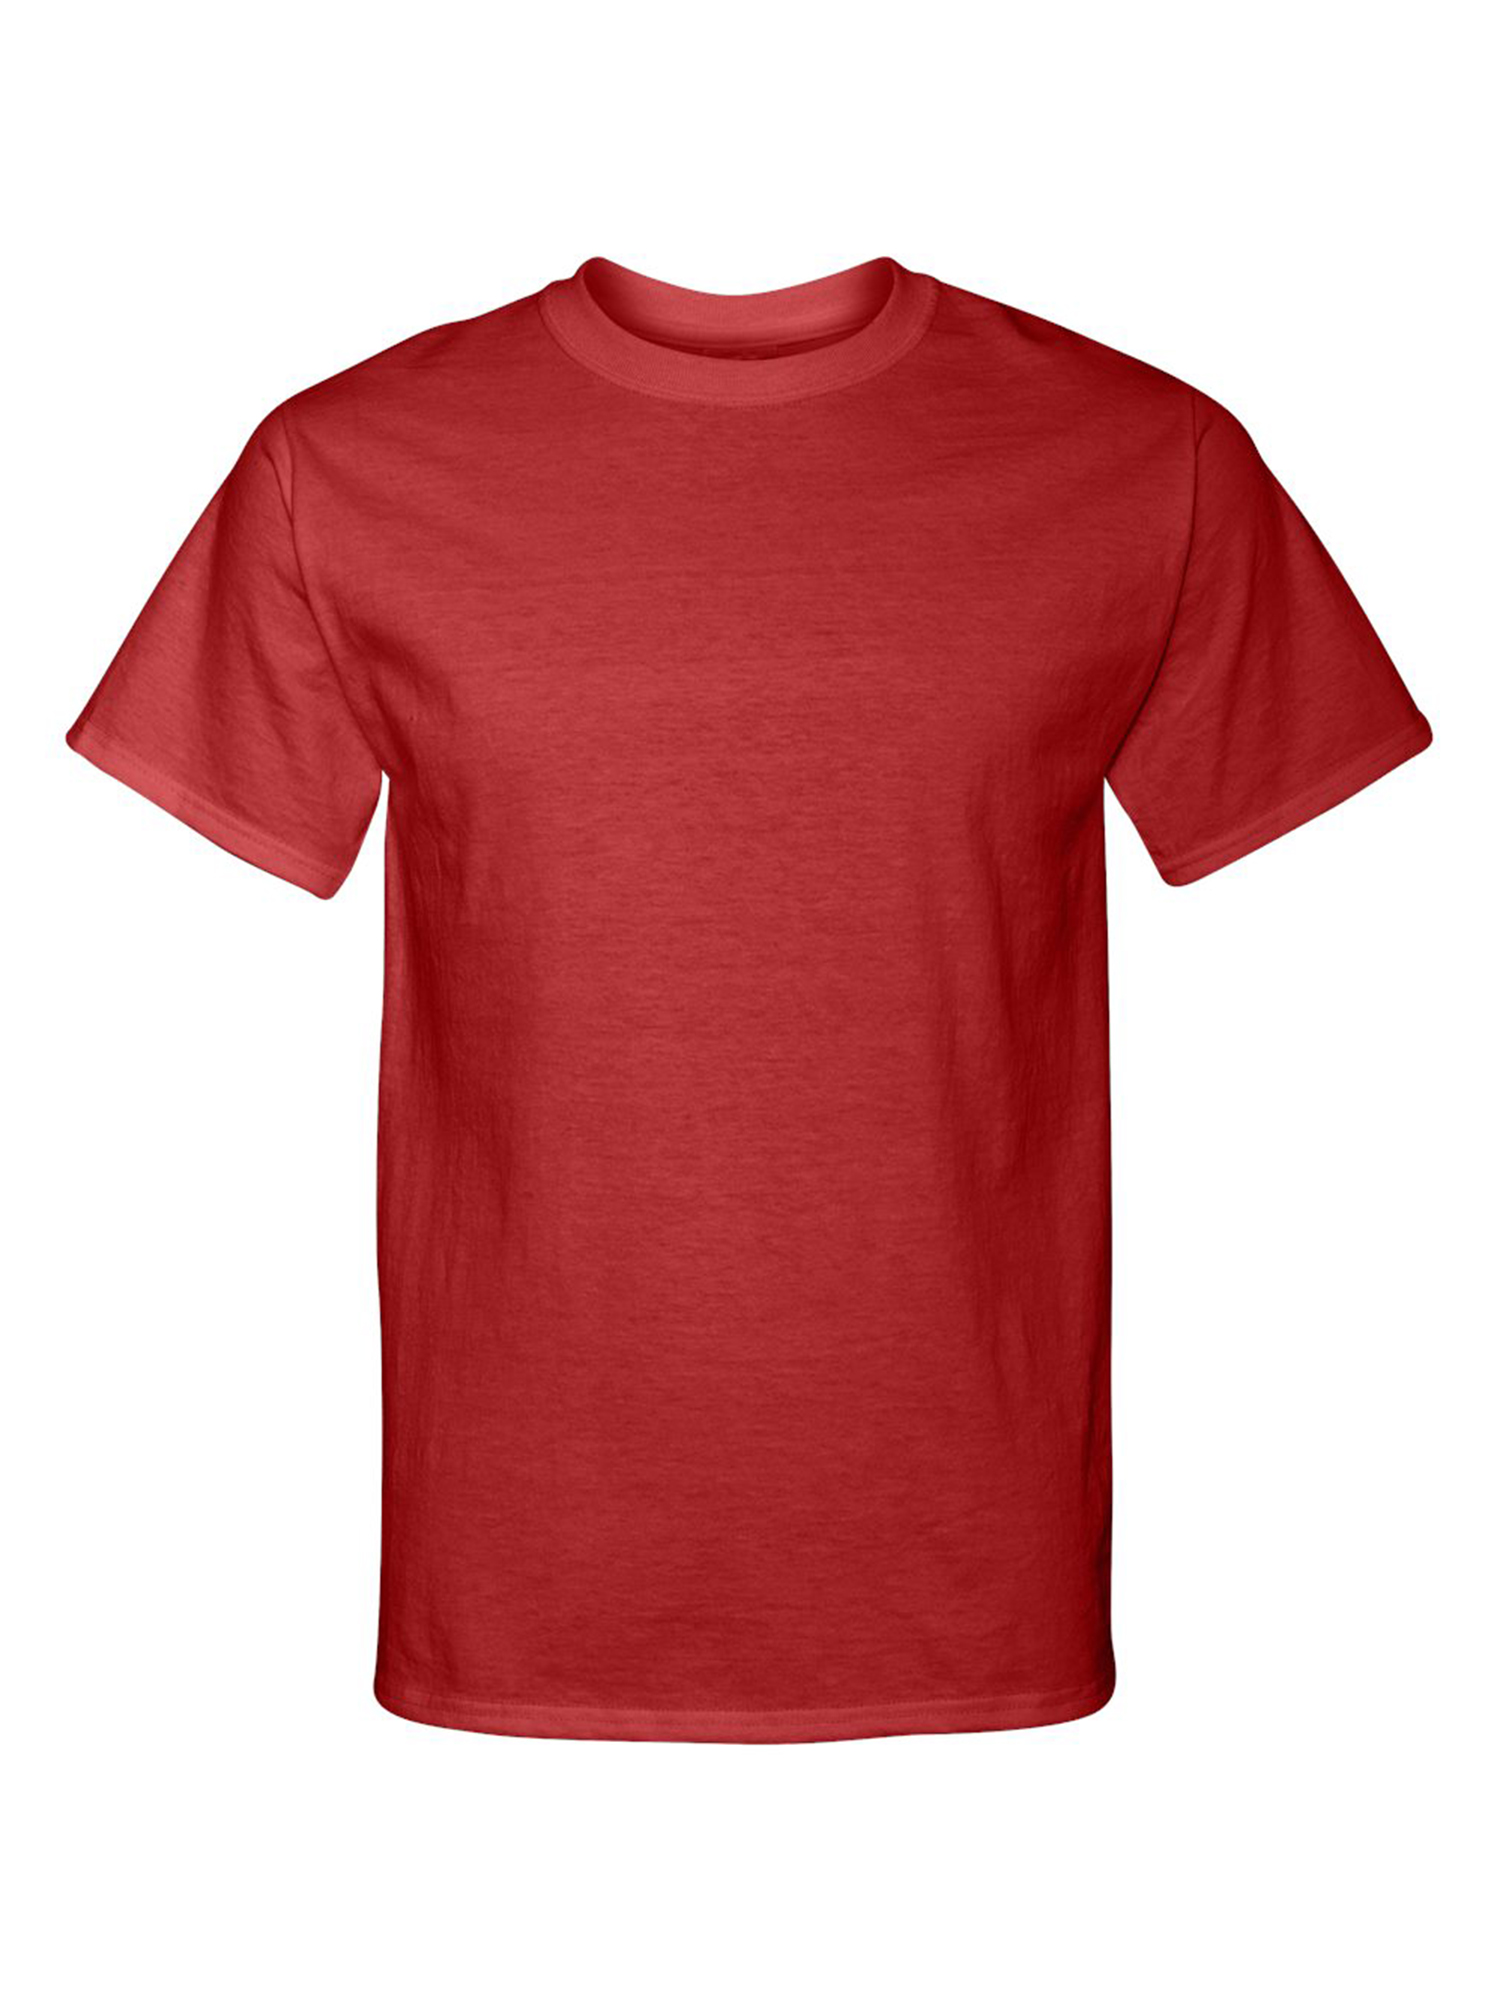 Mens True Red Shirts XLT 2XLT 3XLT Mens Big and Tall T Shirts Big and Tall Shirts for Men Jerzees Dri-Power Tall 50/50 T-Shirt Active Shirt 29MT - image 1 of 3